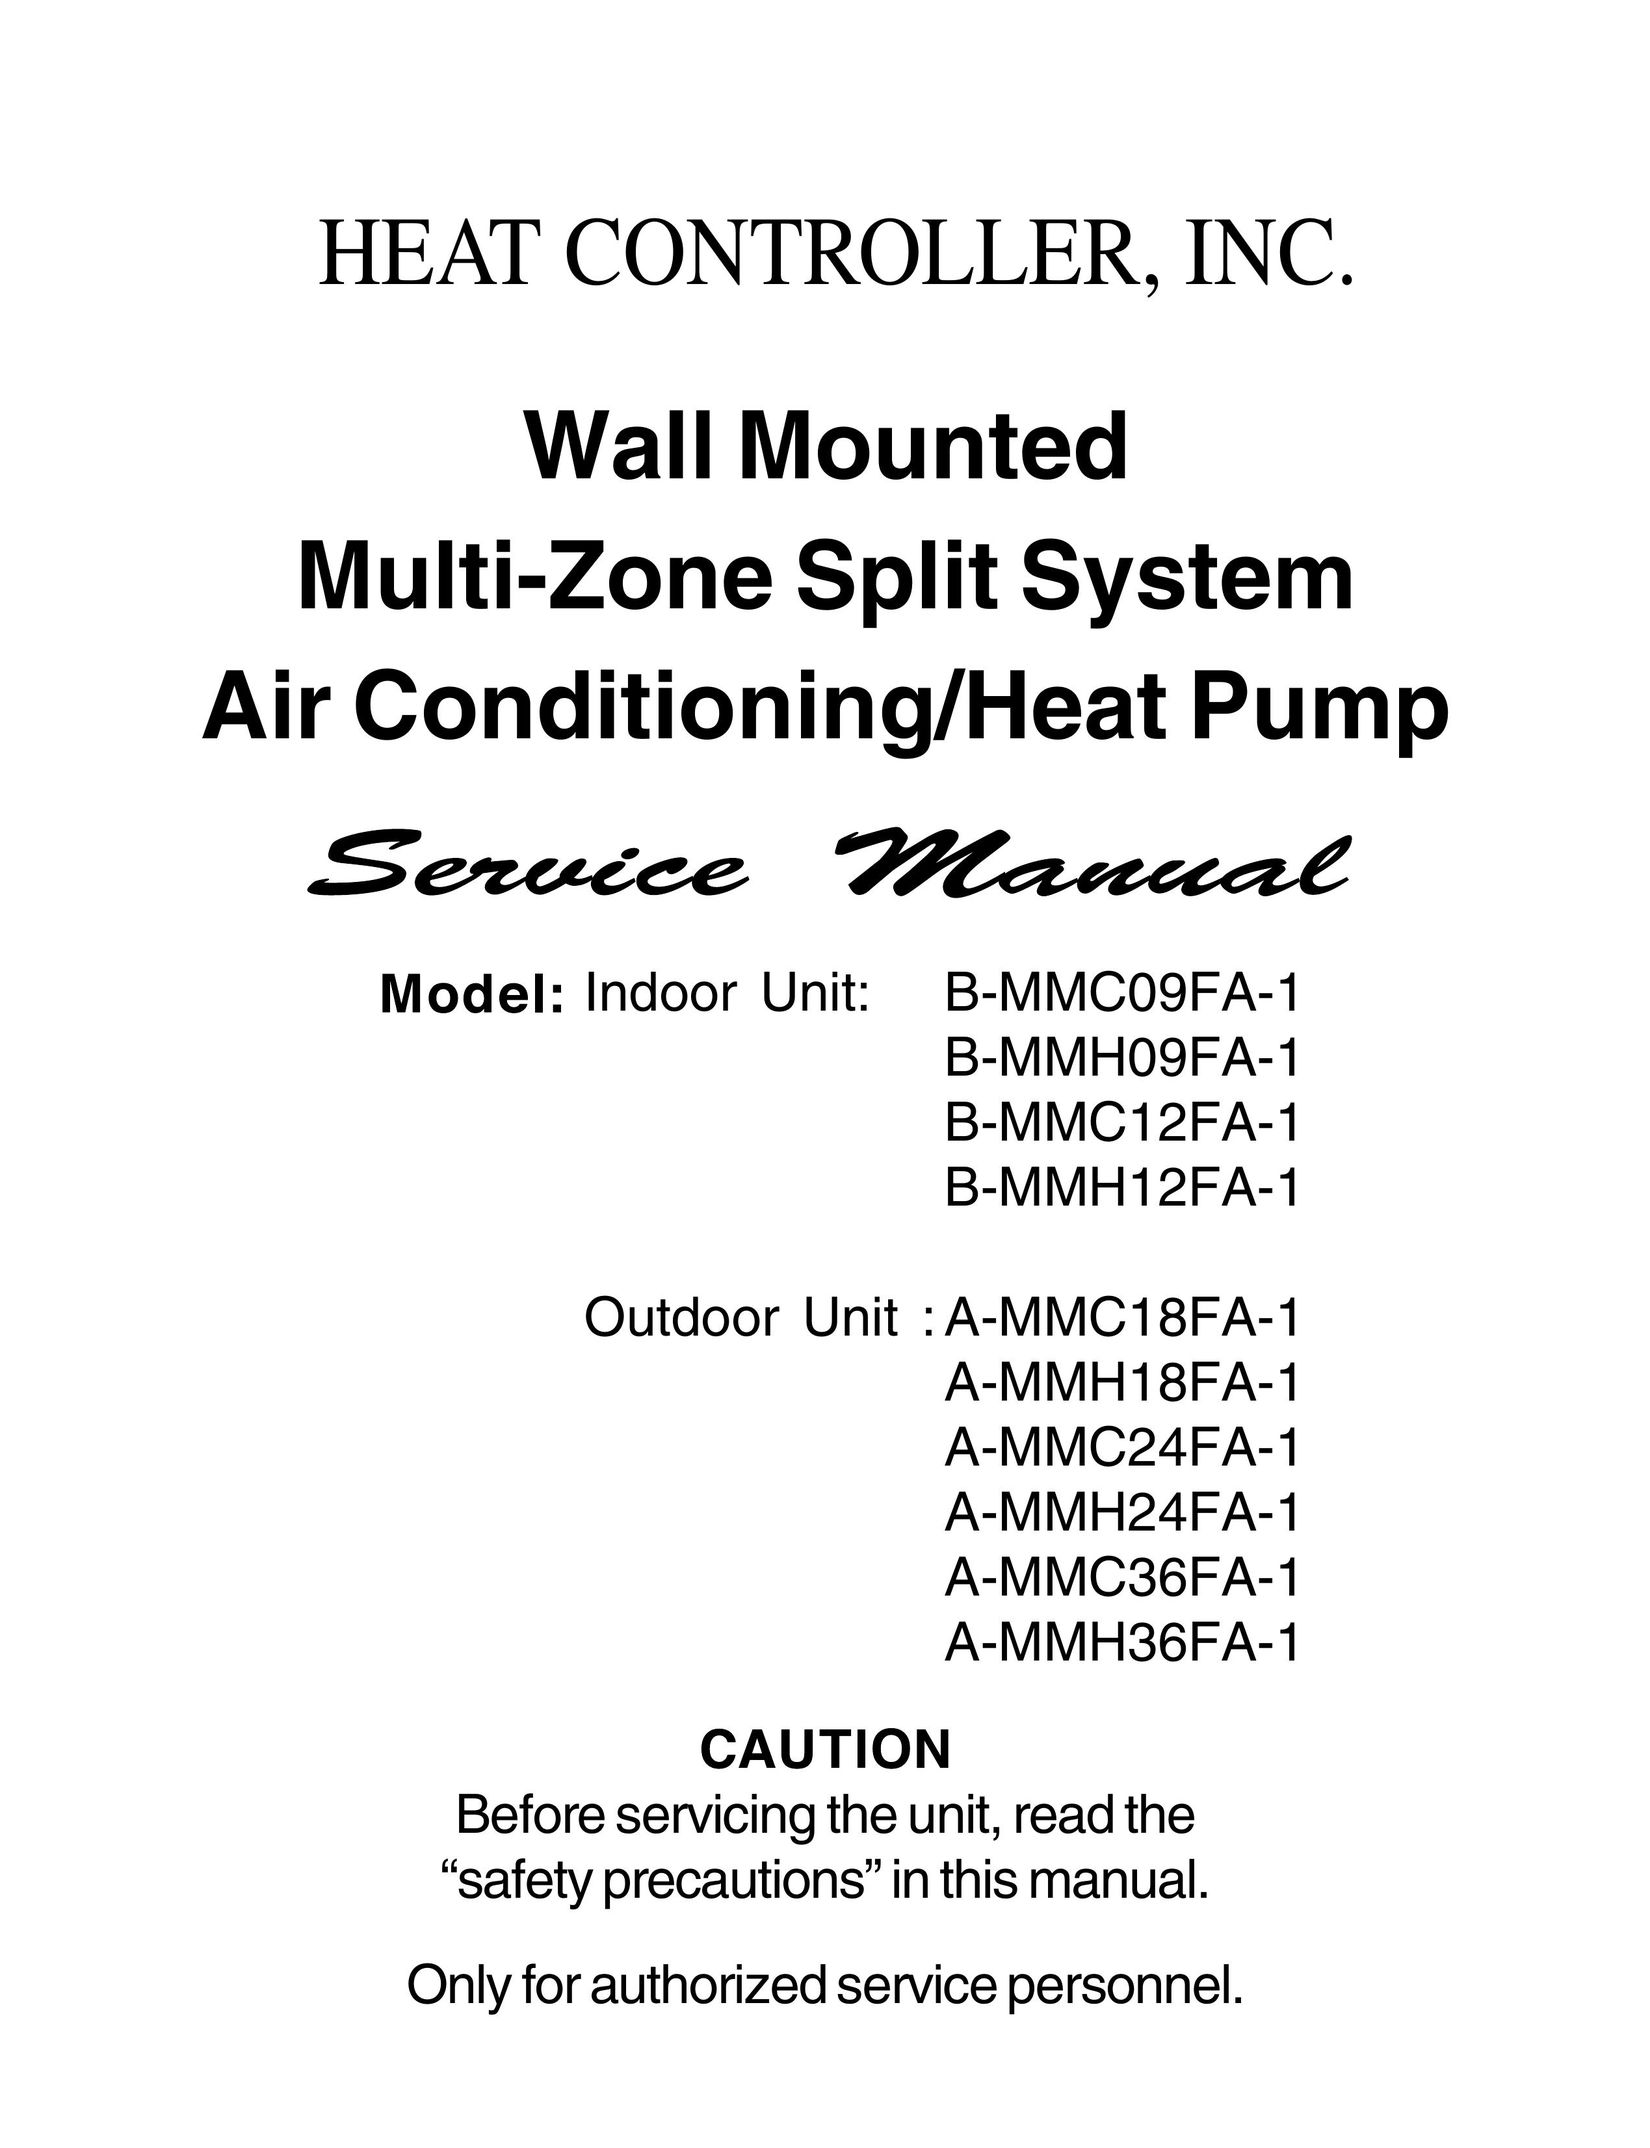 Heat Controller B-MMH09FA-1 Air Conditioner User Manual